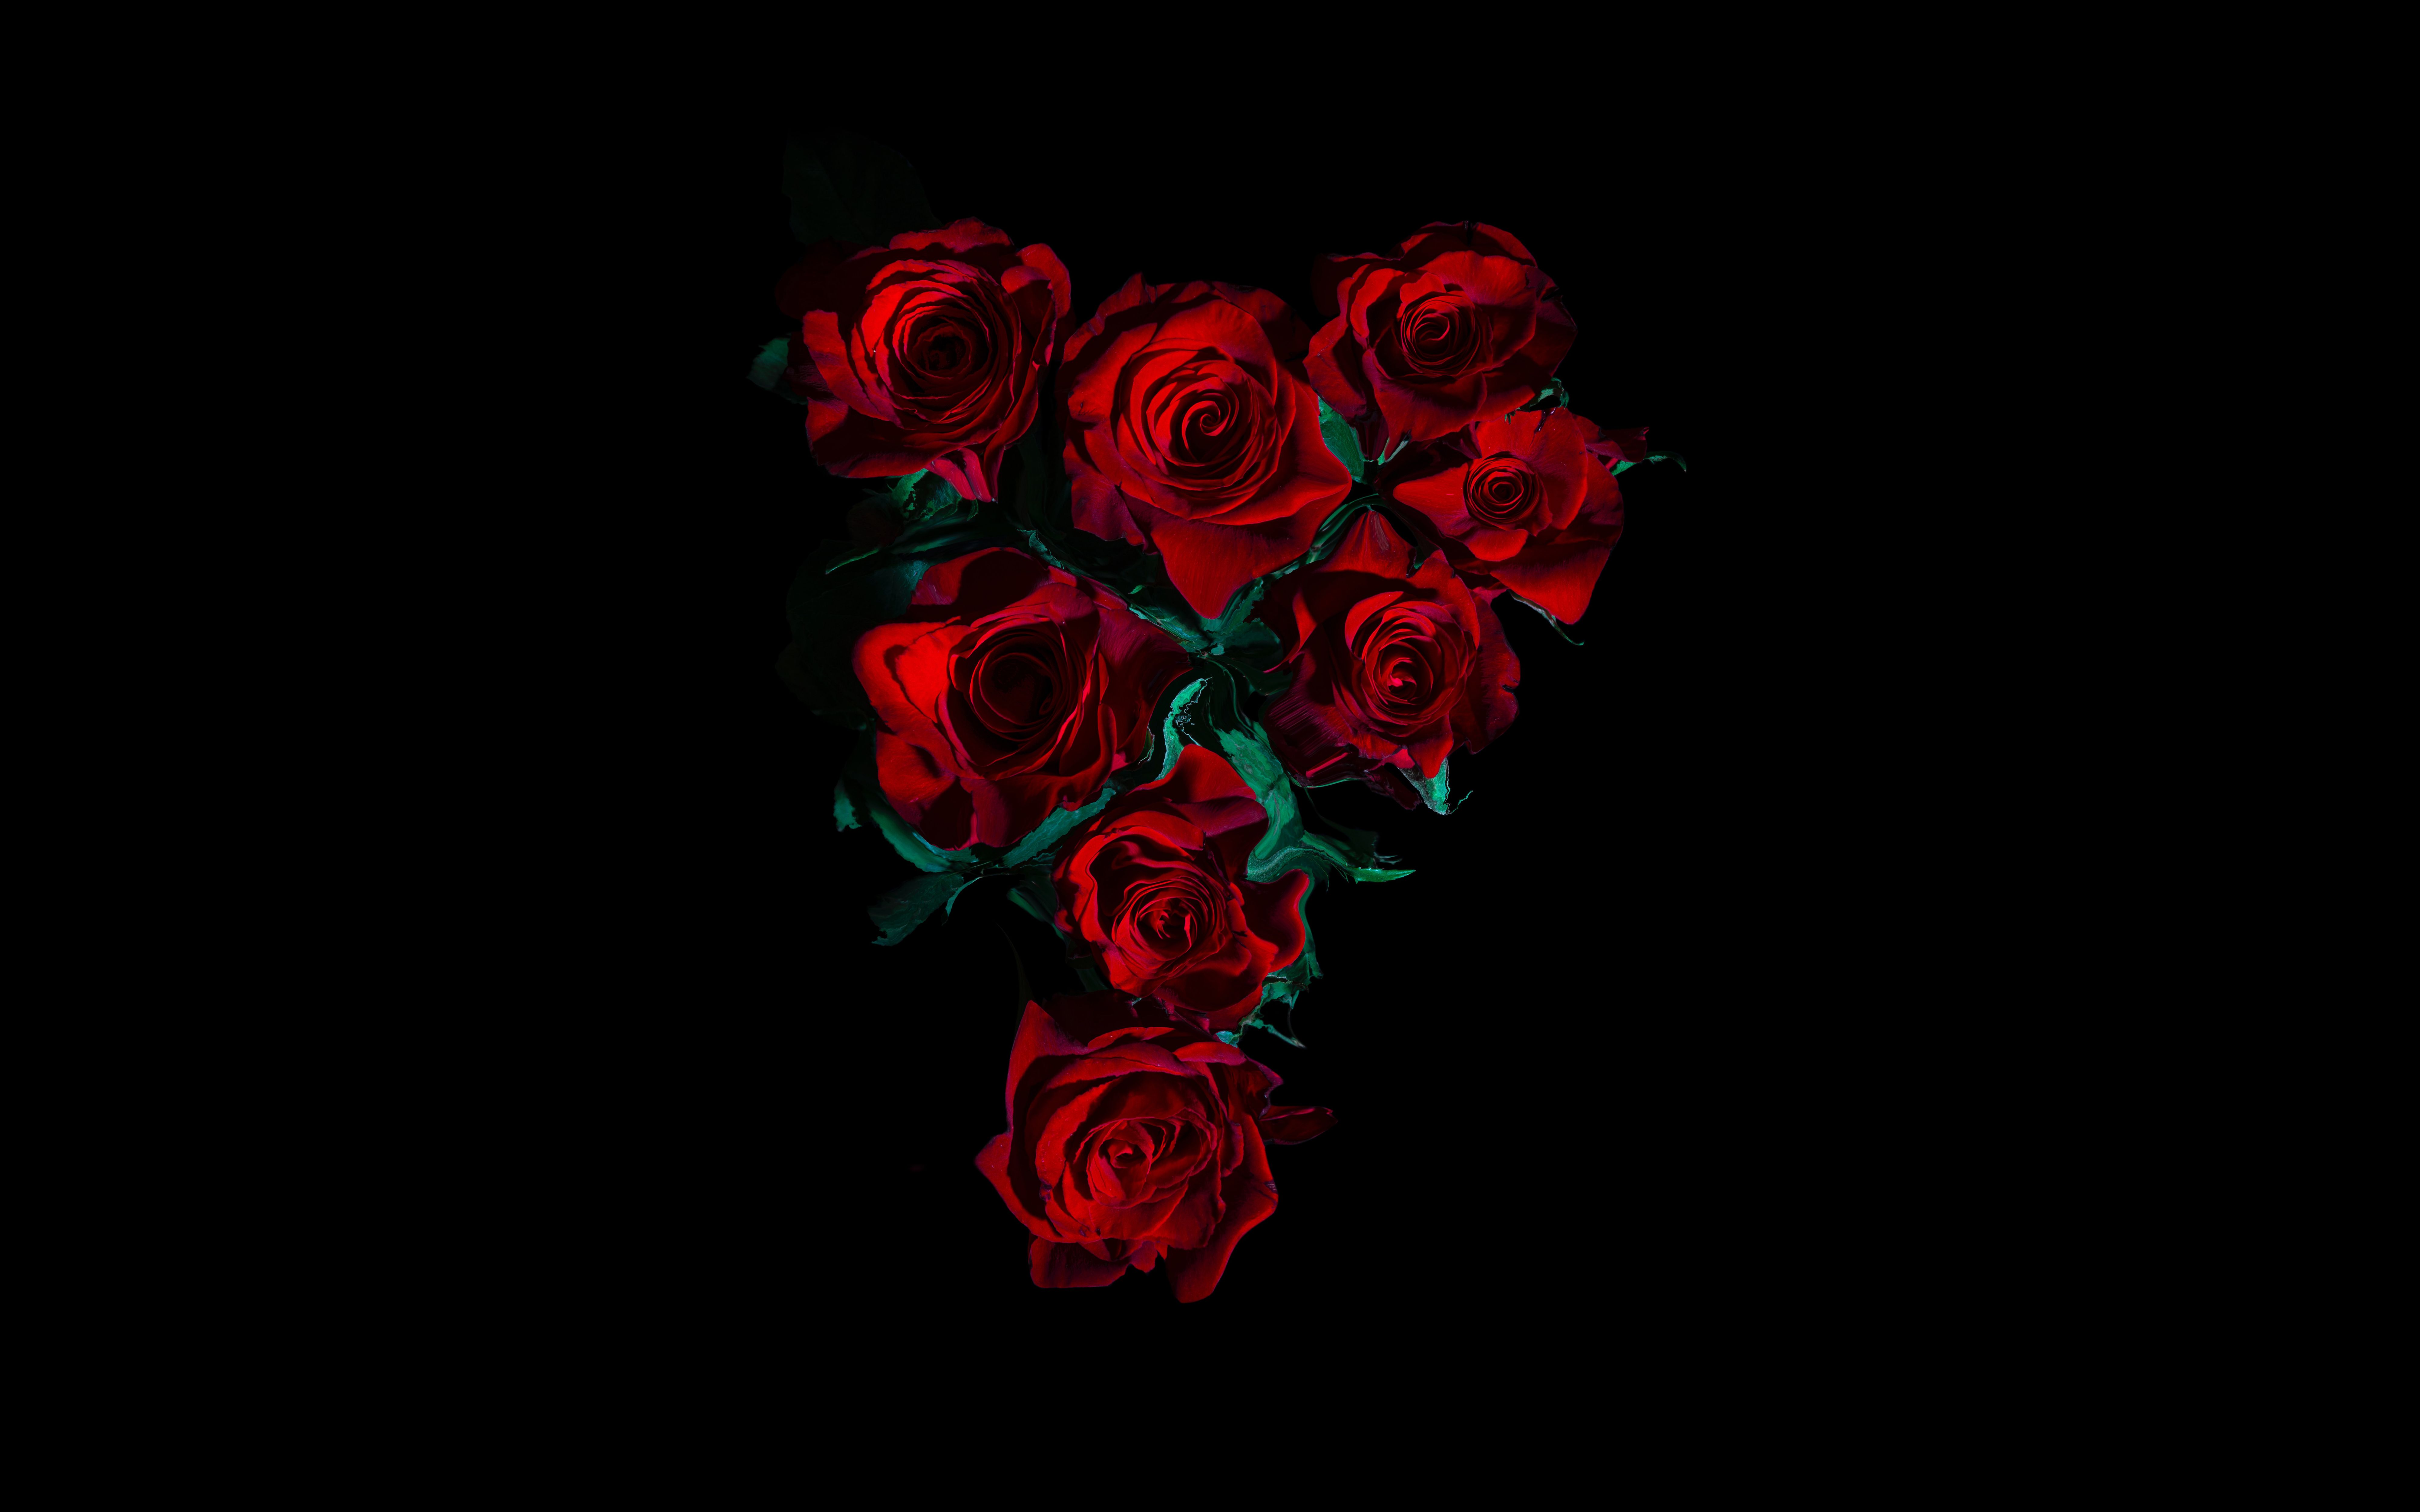 Red Roses 4K Wallpaper, Flower bouquet, Black background, 5K, 8K